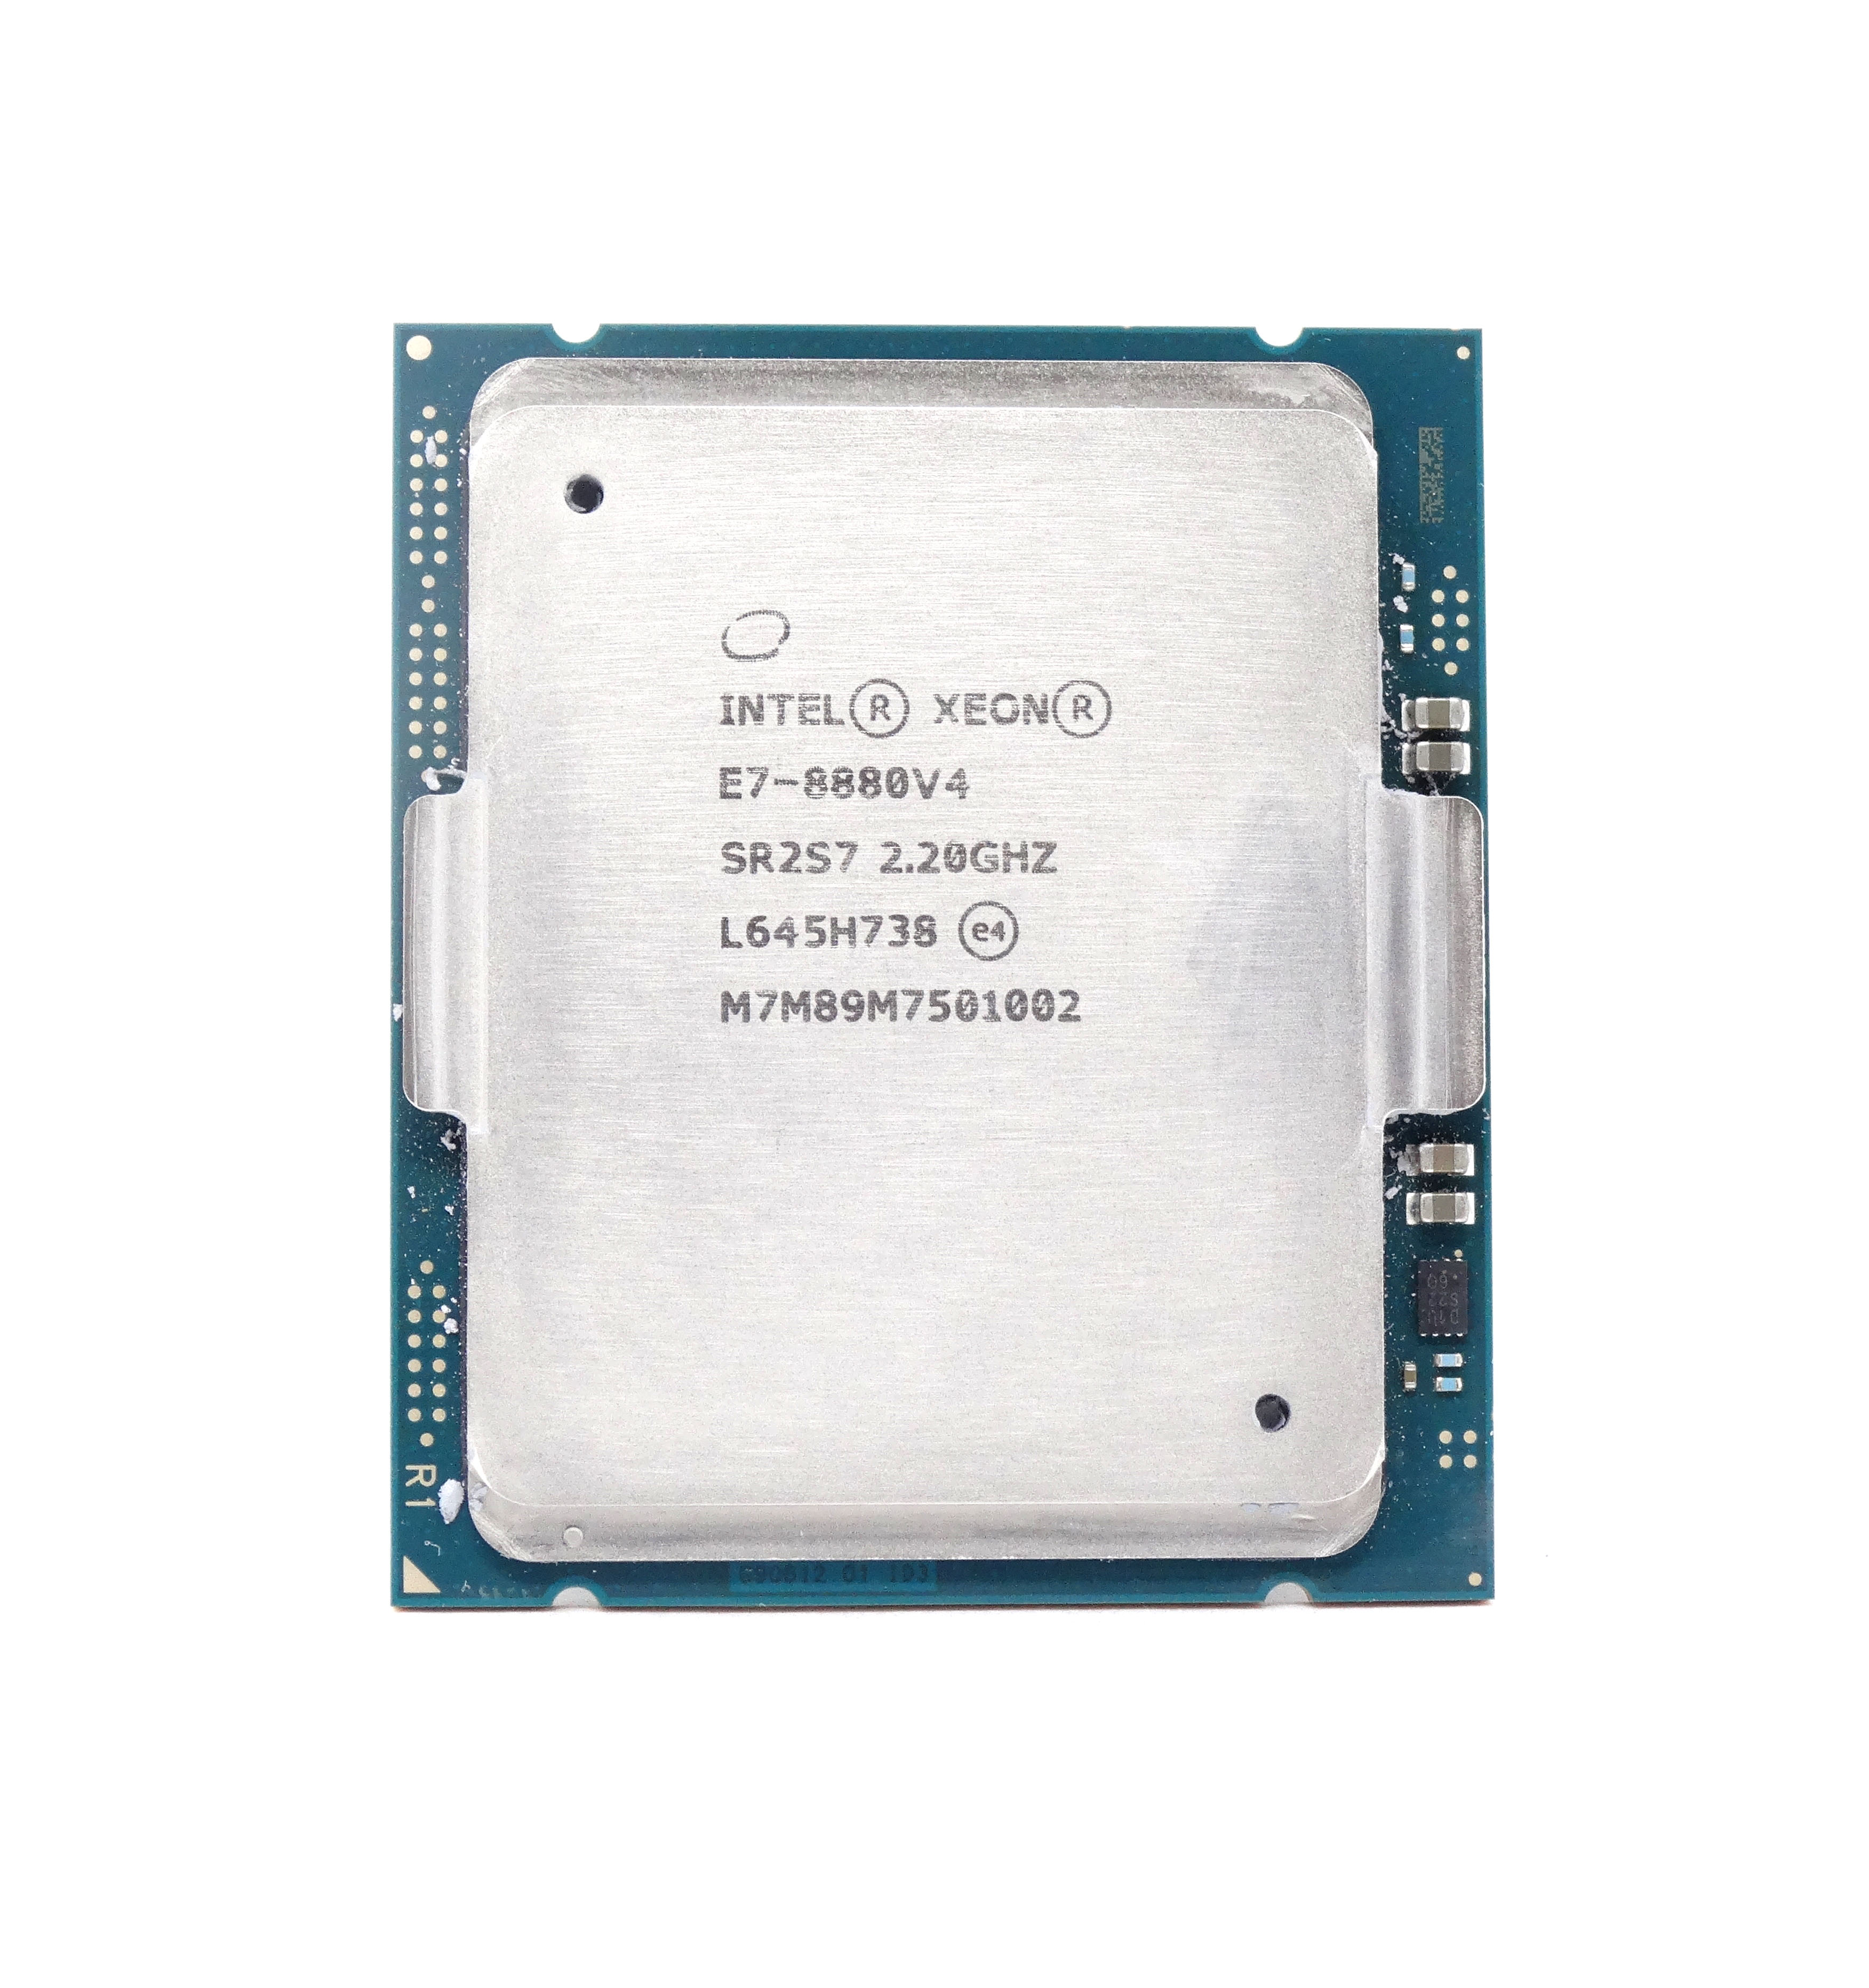 Intel Xeon E7-8880v4 2.2GHz 22 Core 55MB LGA2011 CPU Processor (Xeon E7-8880v4)